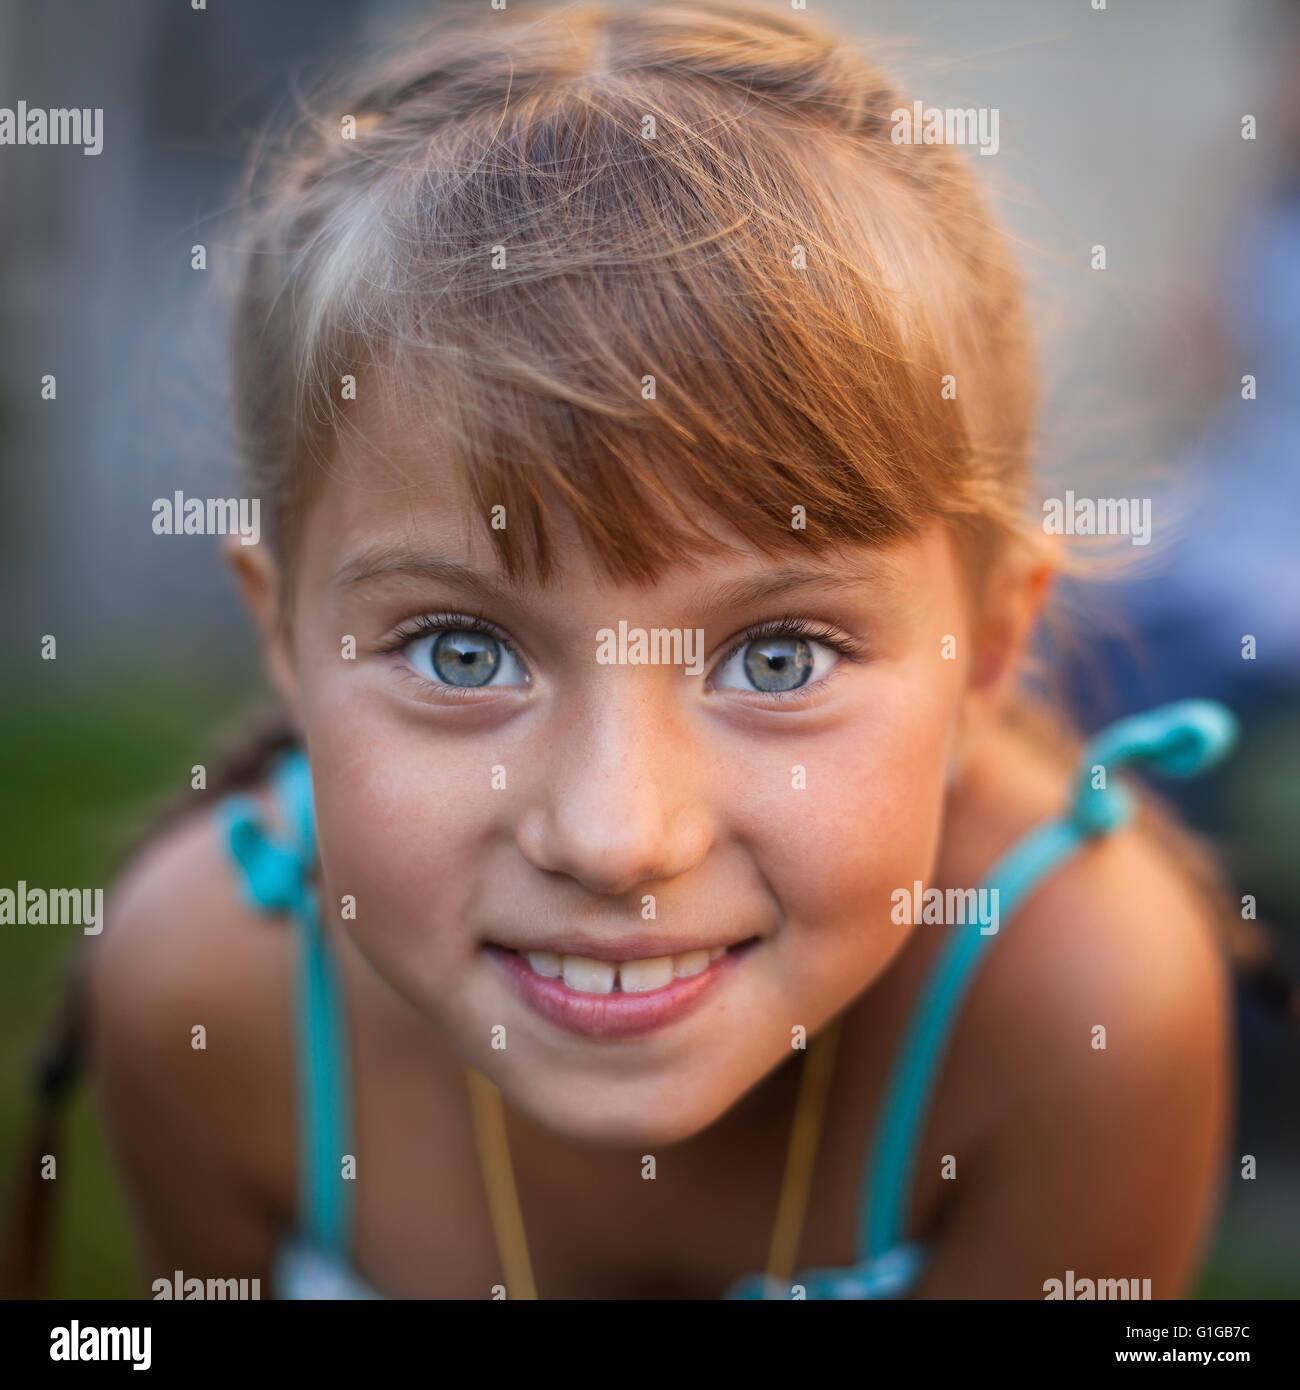 Closeup portrait of a playful cute little girl. Stock Photo